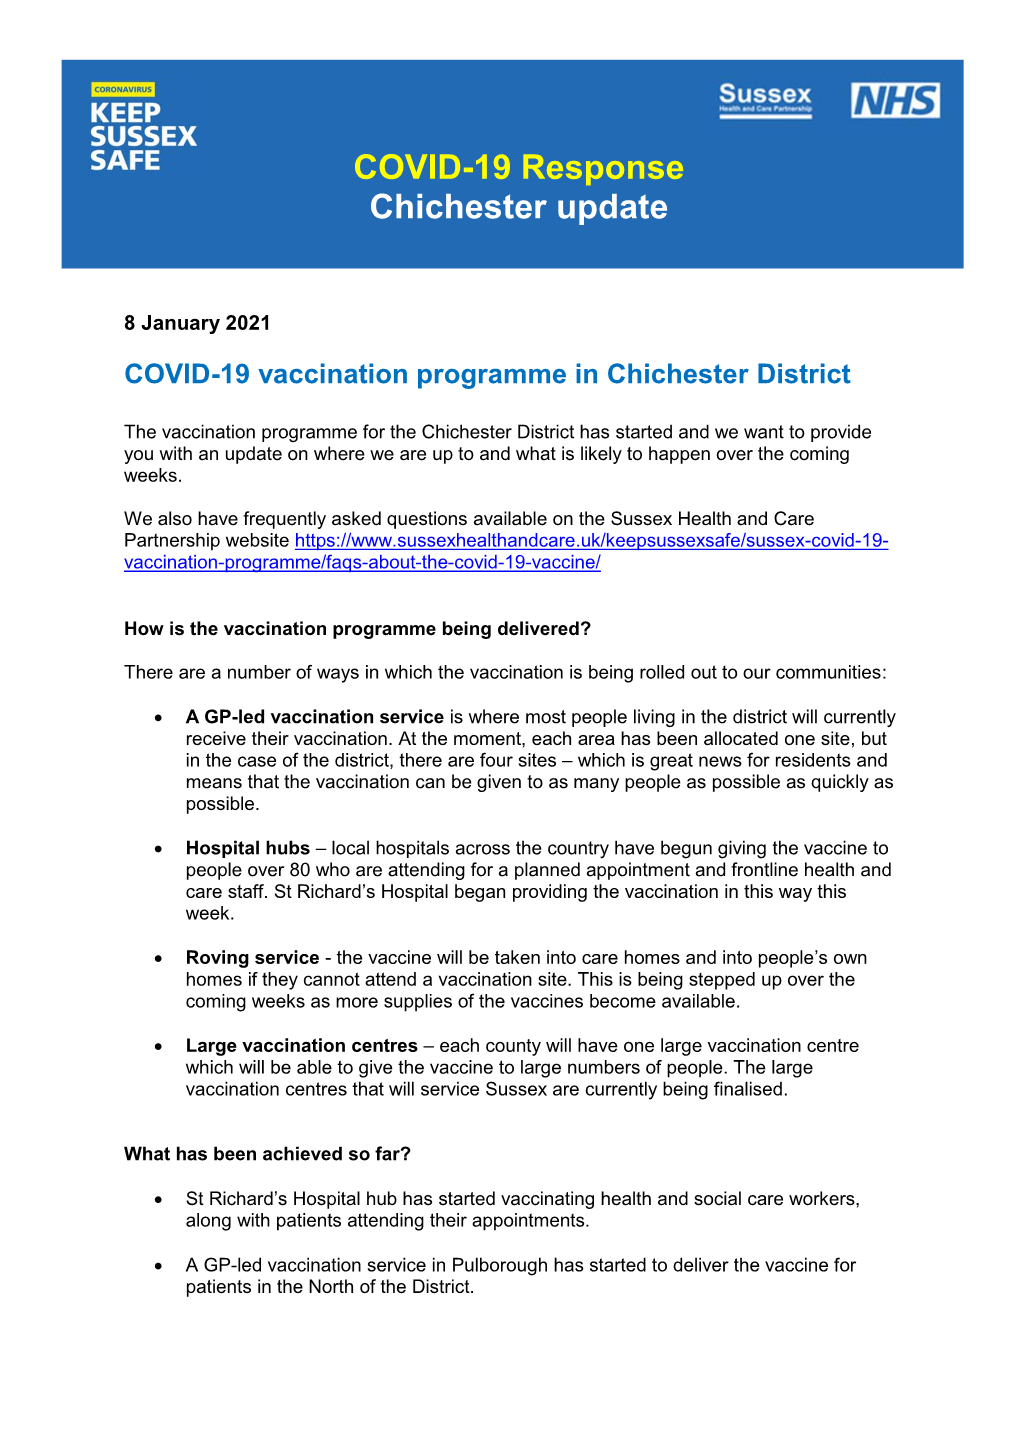 COVID-19 Response Chichester Update